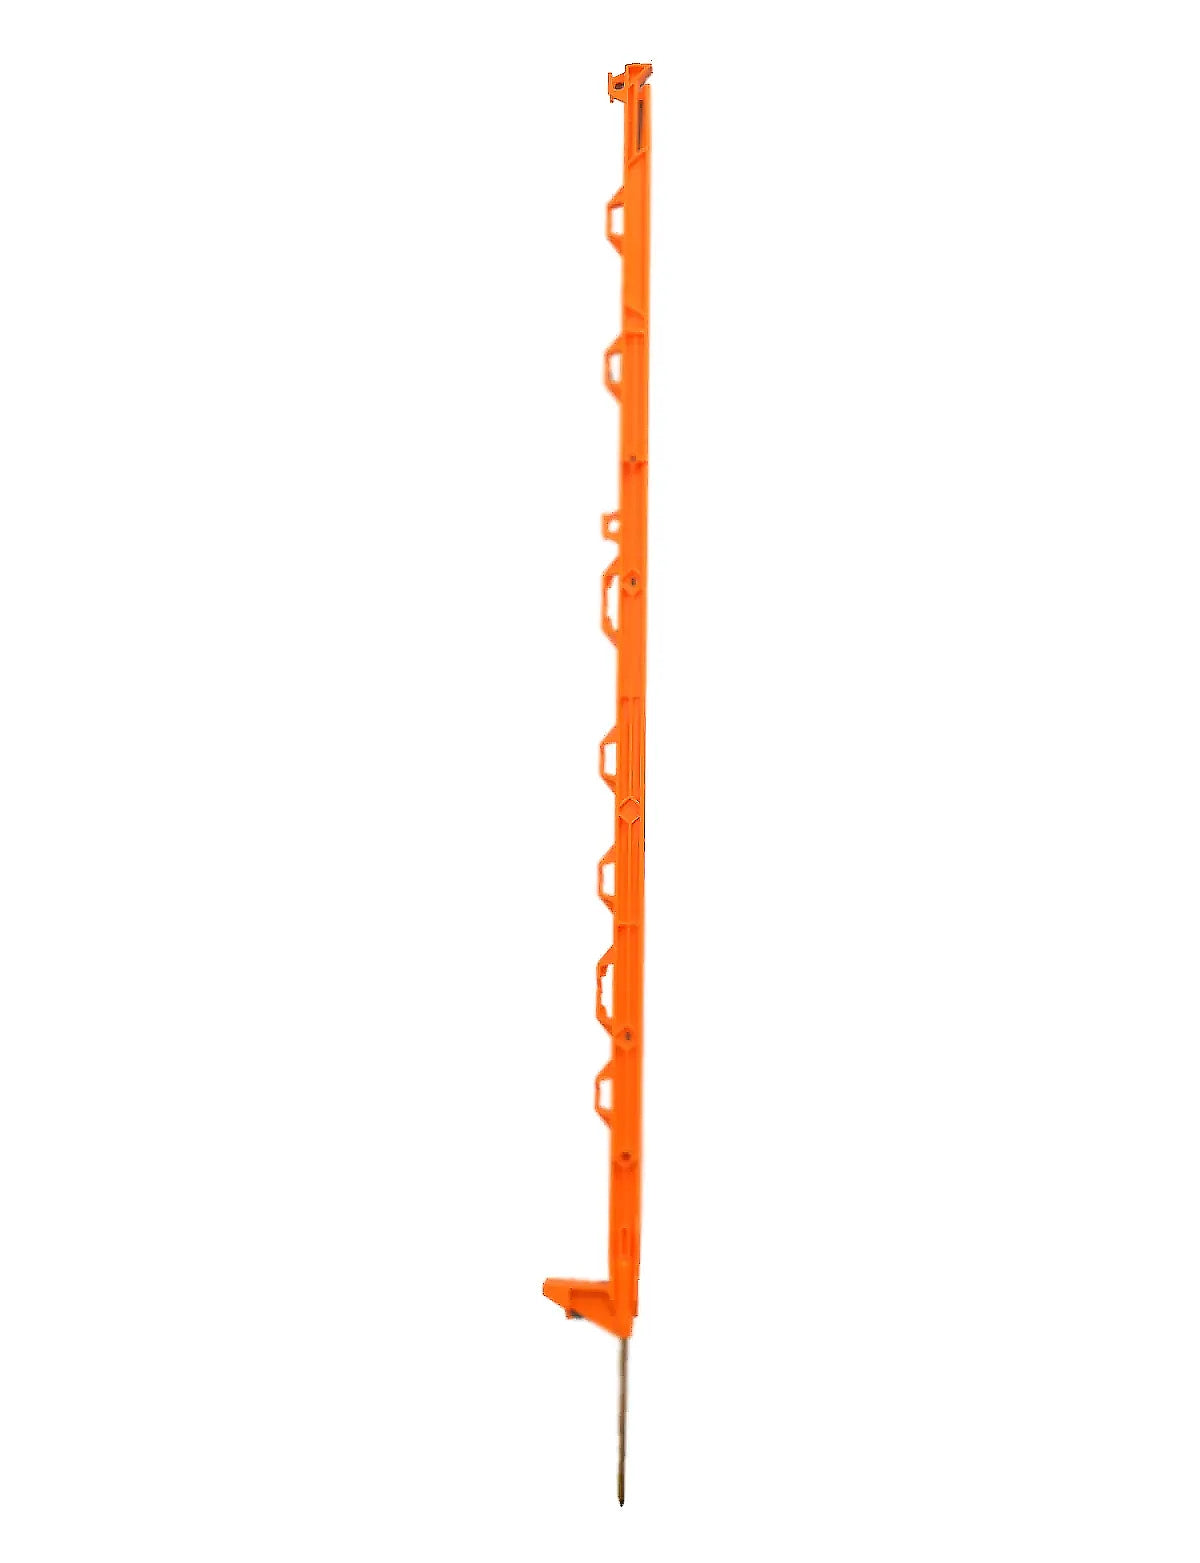 Hotline - Orange Plastic Multiwire Electric Fence Posts 104cm - (10 Pack) *15% OFF!*